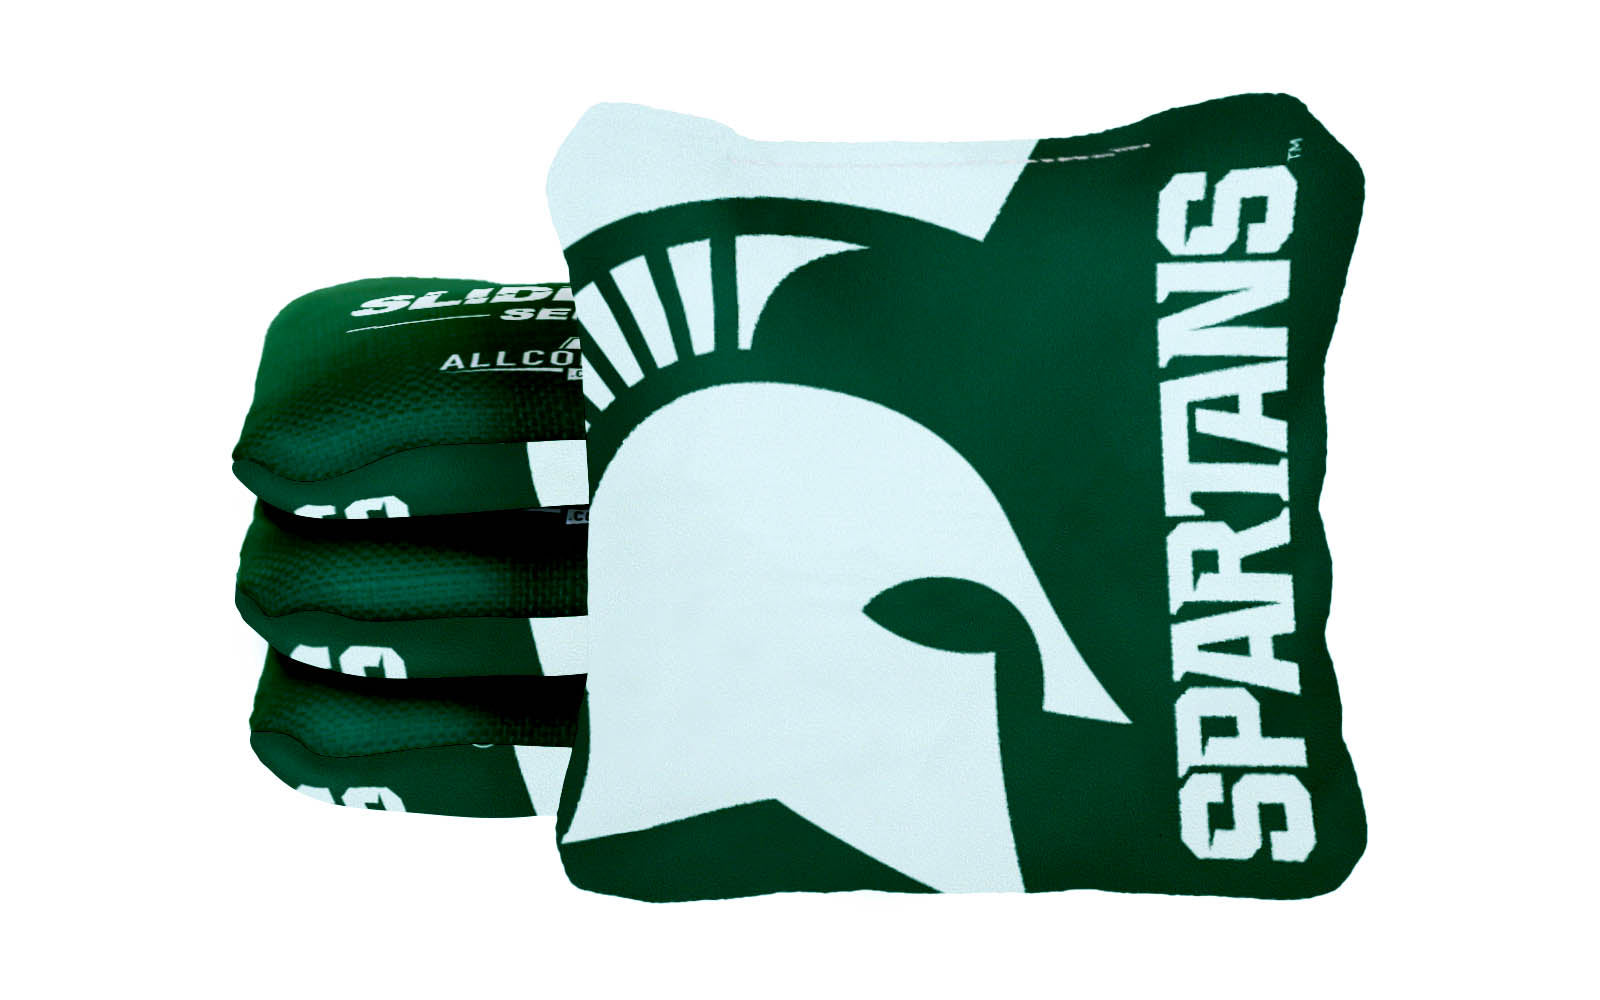 Officially Licensed Collegiate Cornhole Bags - Slide Rite - Set of 4 - Michigan State University